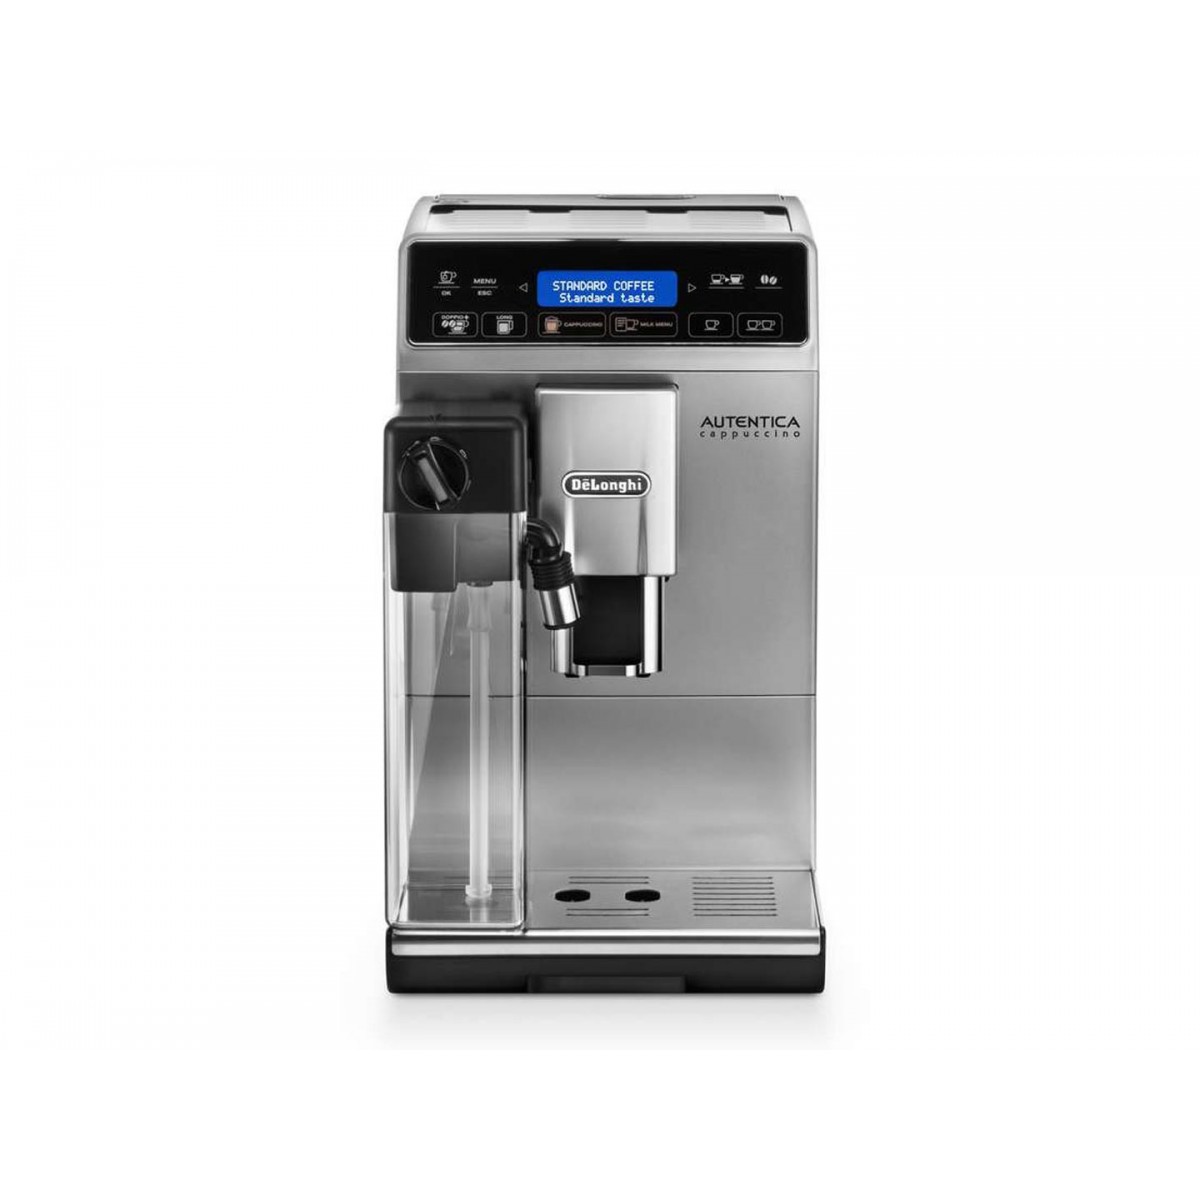 De Longhi Autentica ETAM29660SB - Espresso machine - Coffee beans - Ground coffee - Built-in grinder - 1450 W - Black - Silver